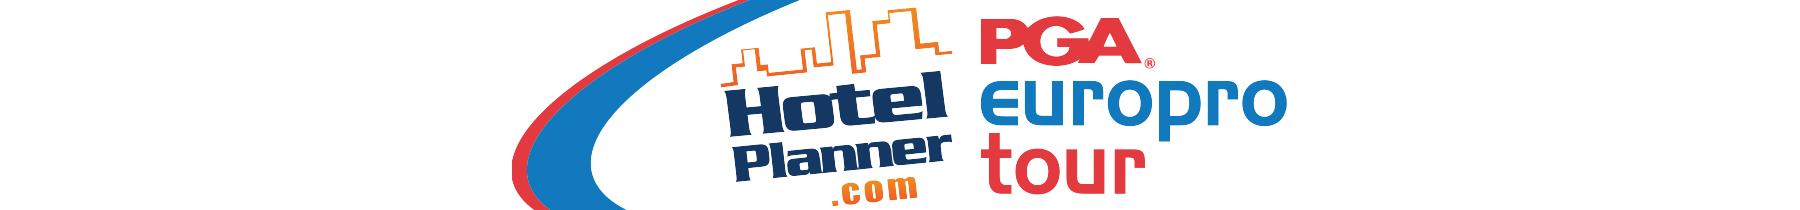 hotel planner logo cropmod